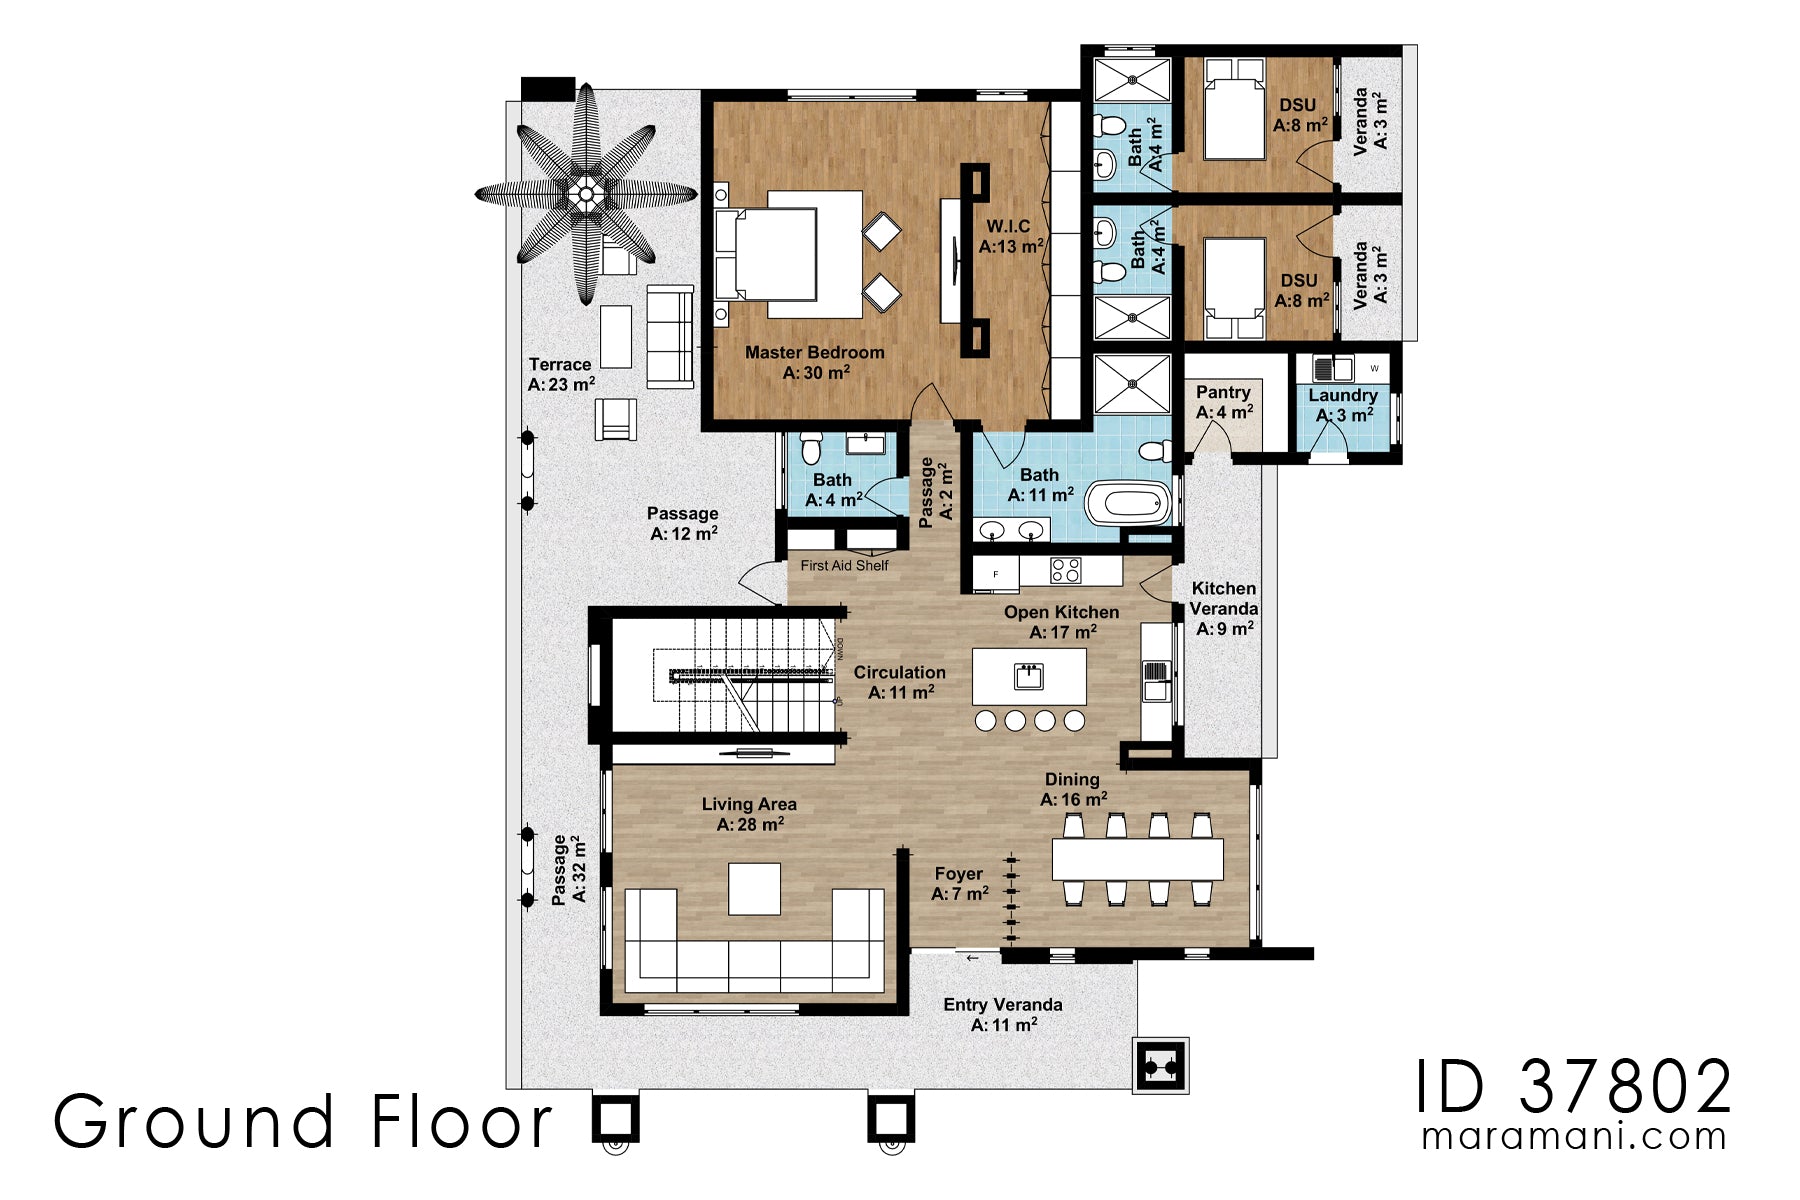 Modern house plan 7 bedrooms - ID 37802